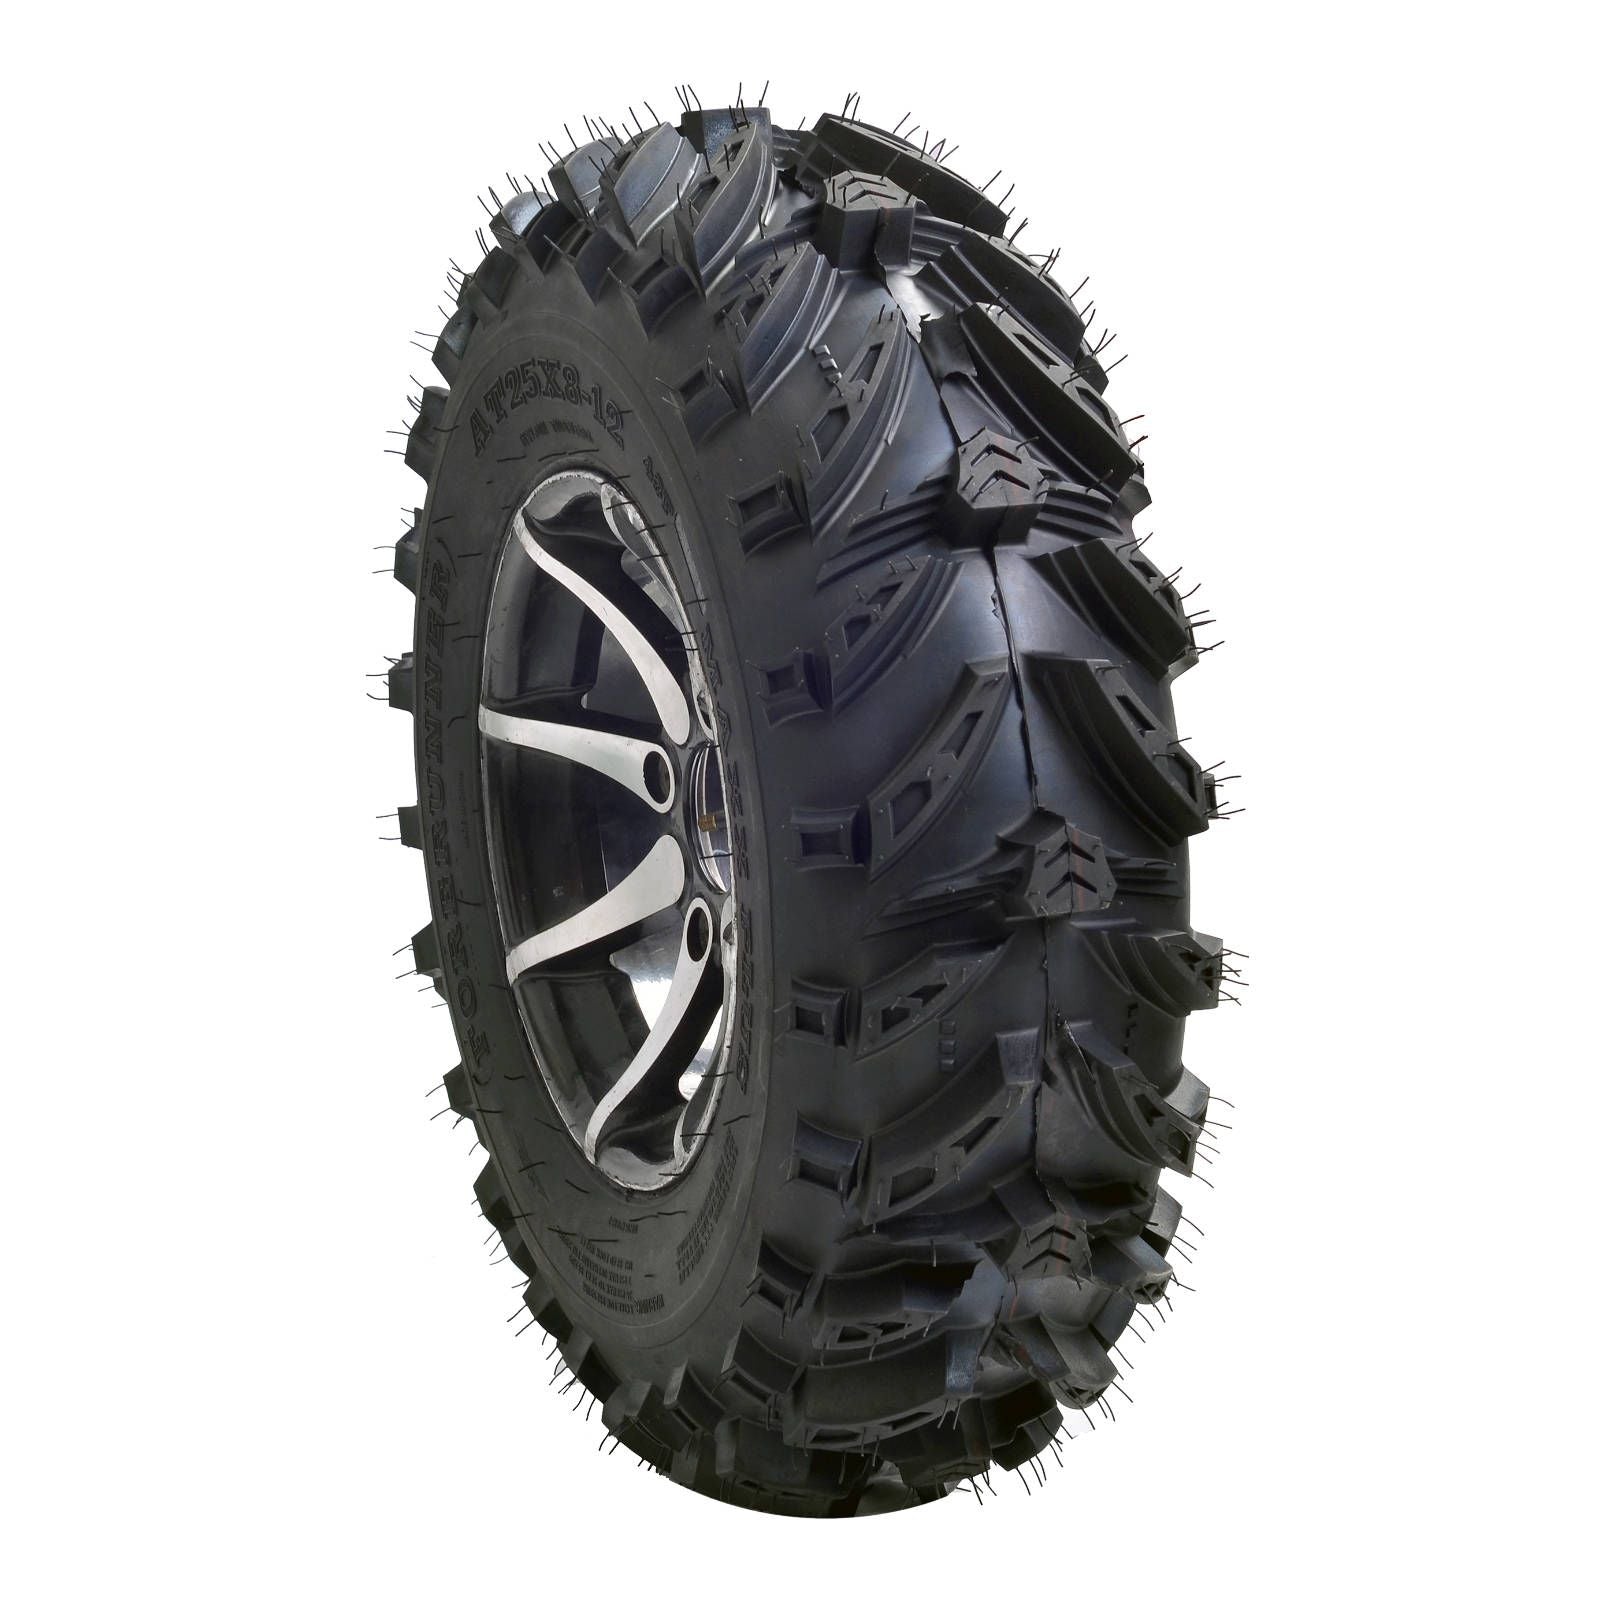 New FOREUNNER ATV Tyre Maxx Plus - 24 x 10 x 11 (6PR) #11X24X10MAXXPLUS